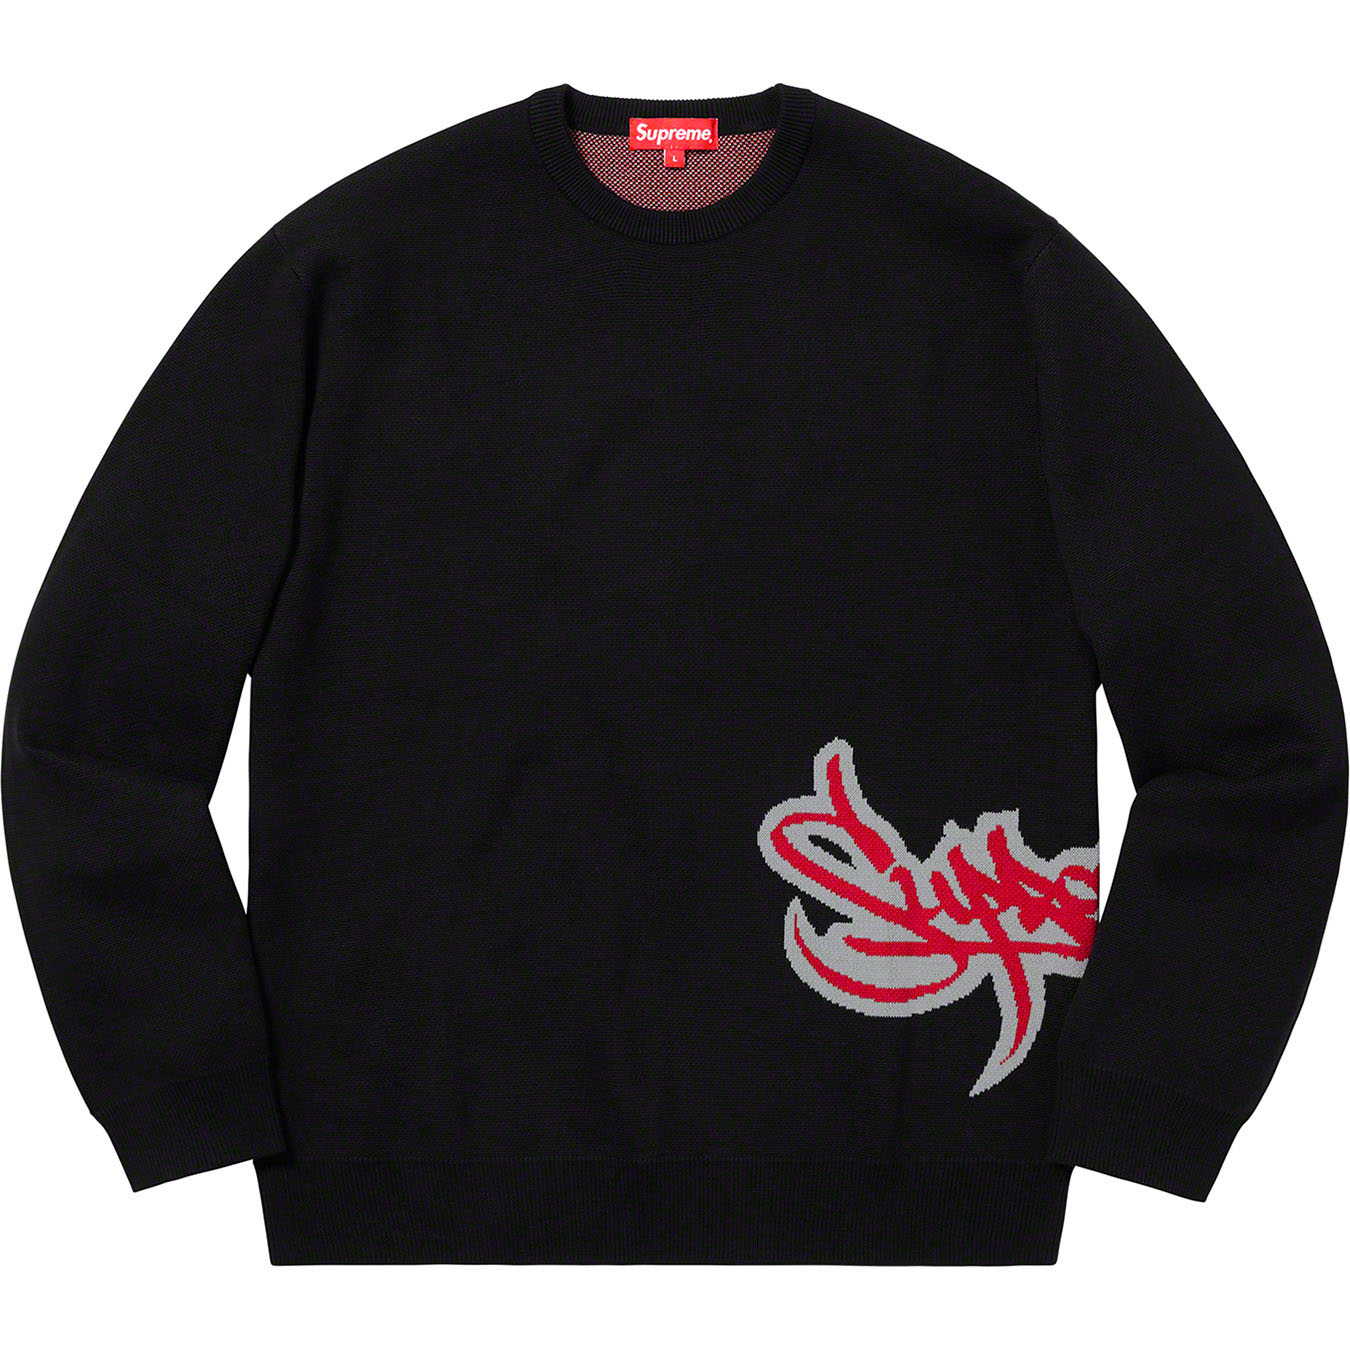 Tag Logo Sweater | Supreme 19ss